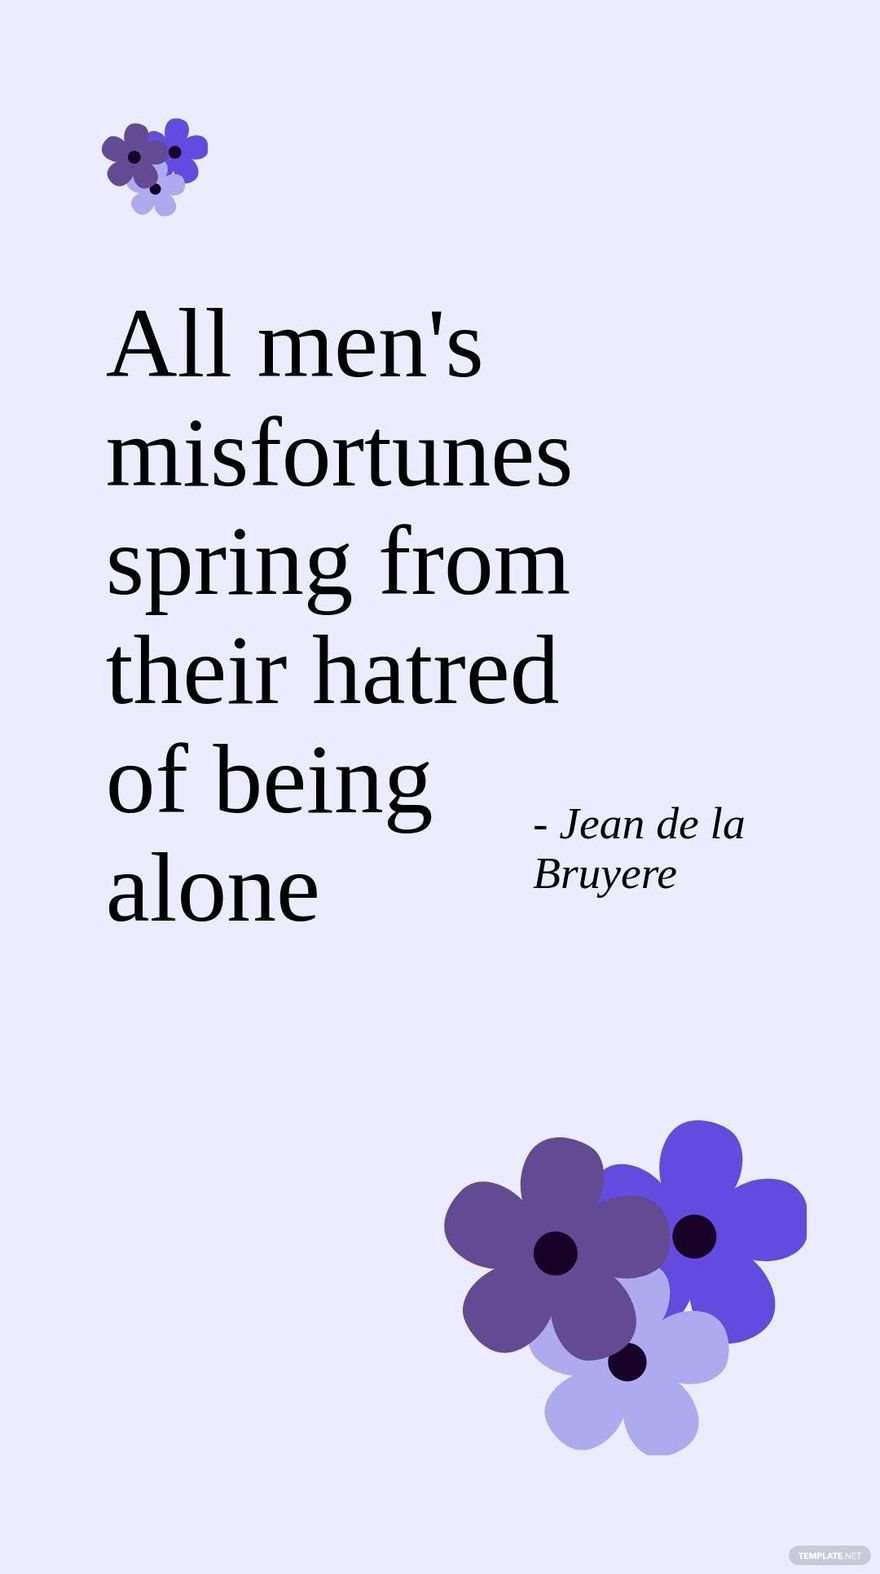 Jean de la Bruyere - All men's misfortunes spring from their hatred of being alone